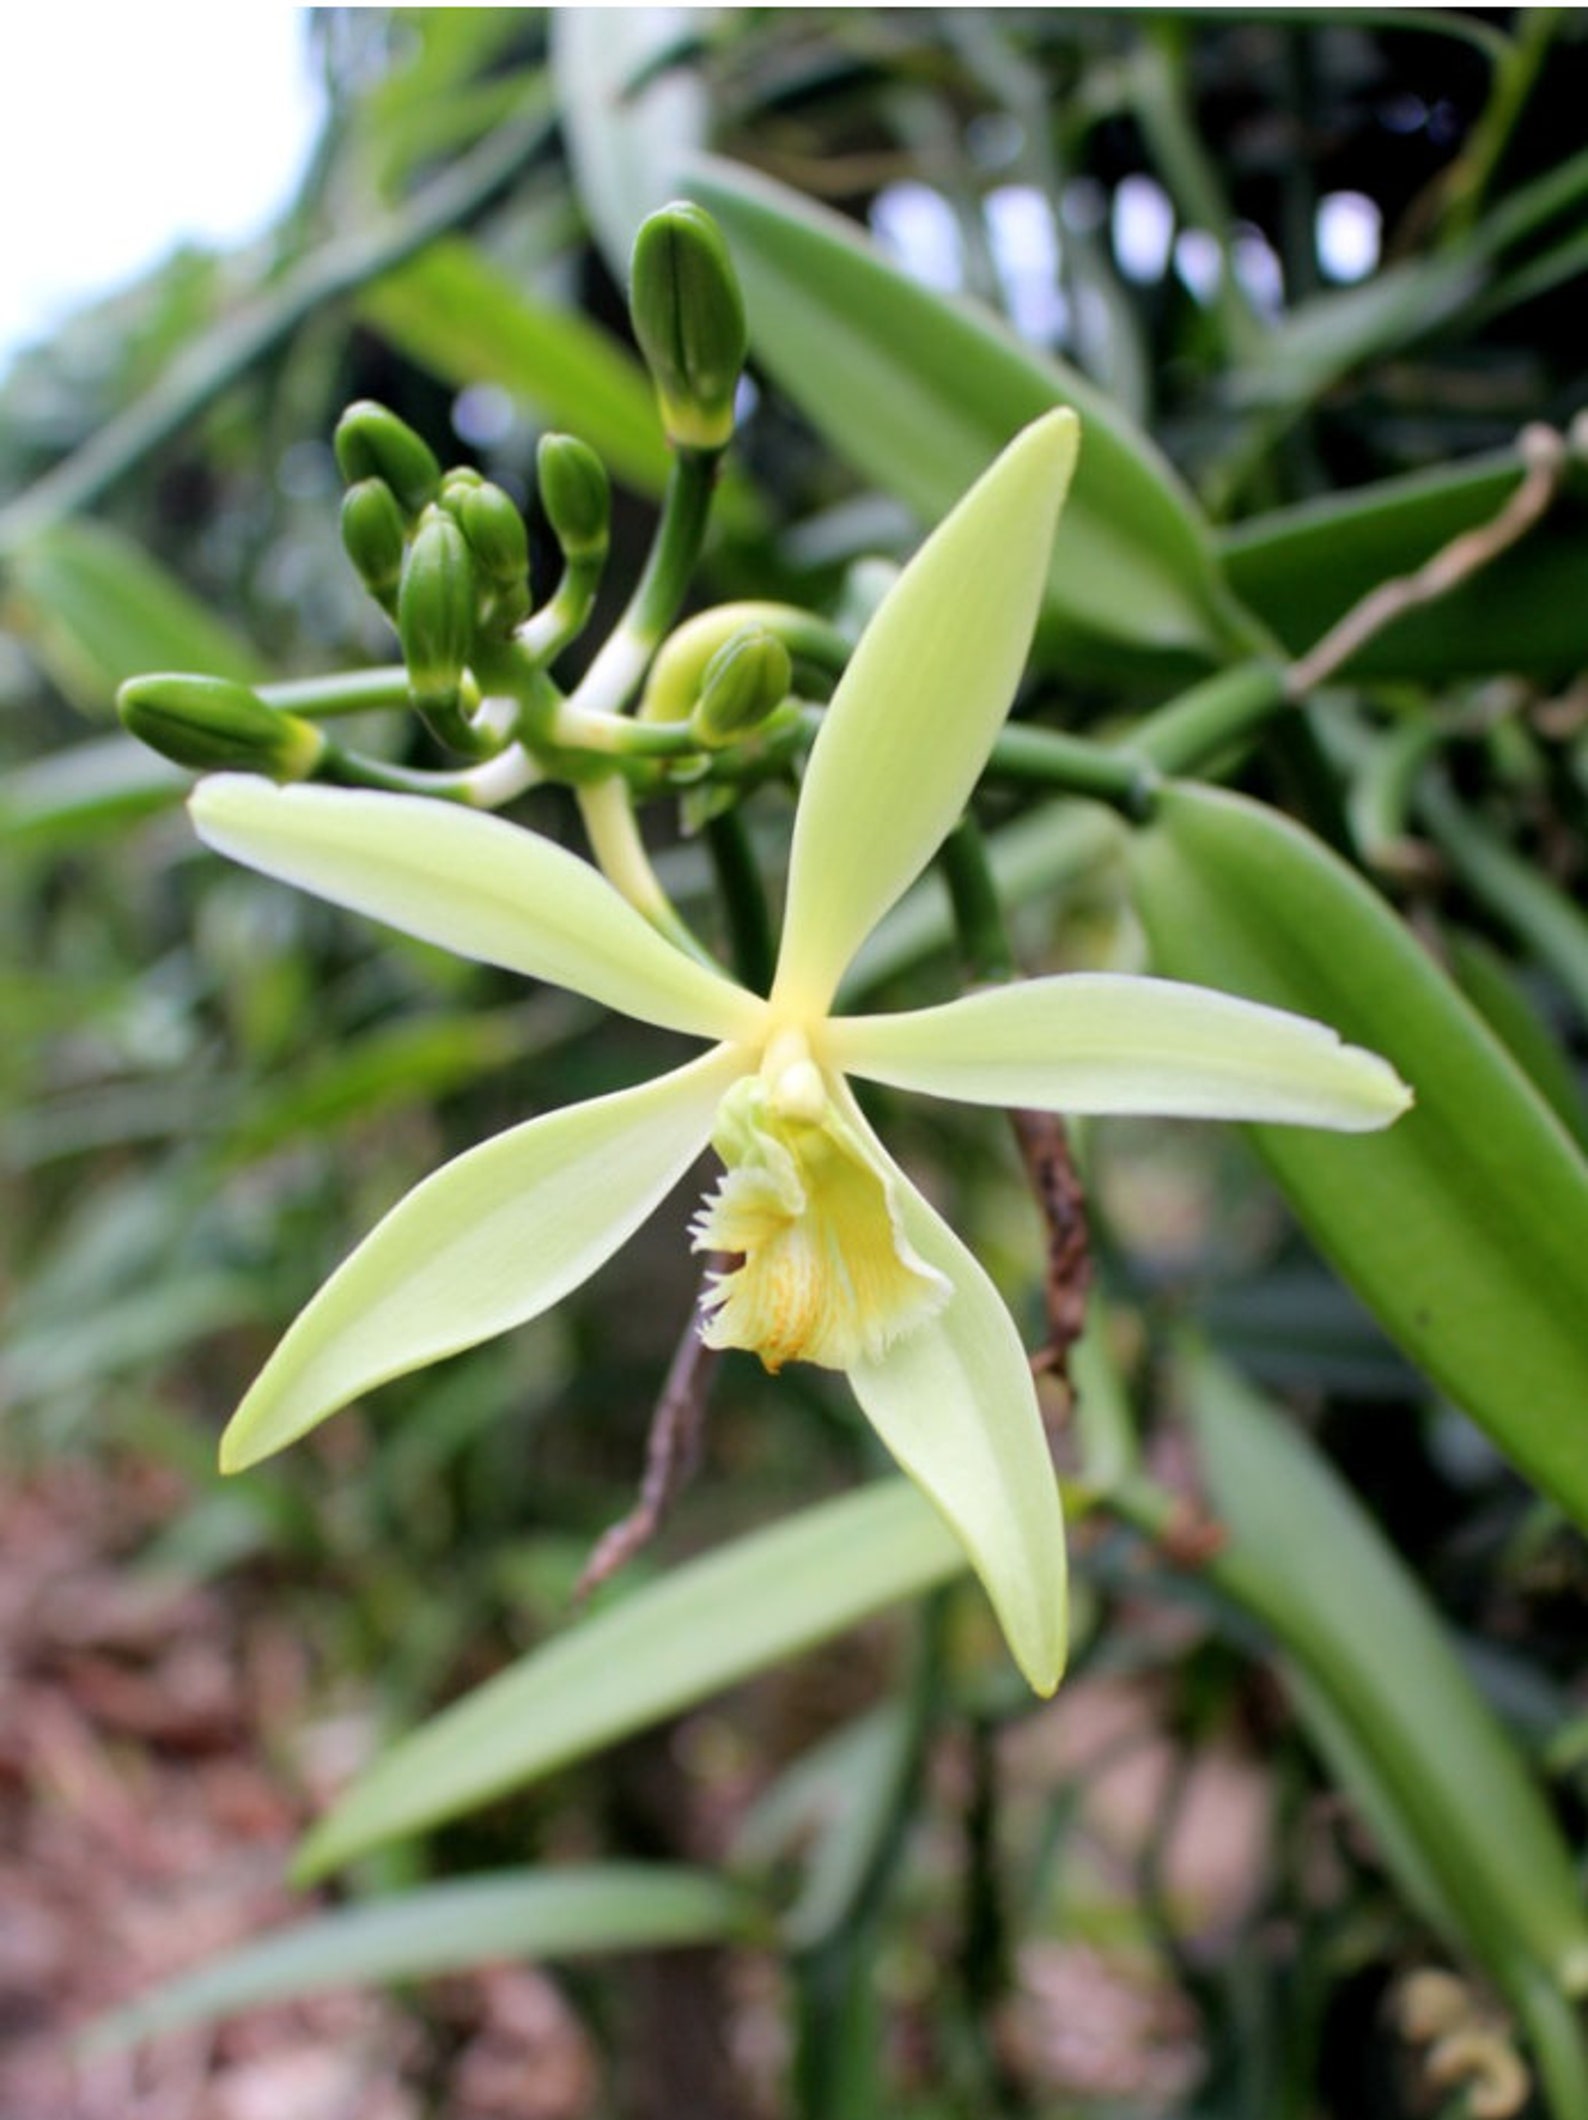 Vanilla plants. Орхидея ваниль вариегатная. Орхидея ваниль плосколистная. Орхидея ваниль Грин. Vanilla planifolia “variegated Yellow”.